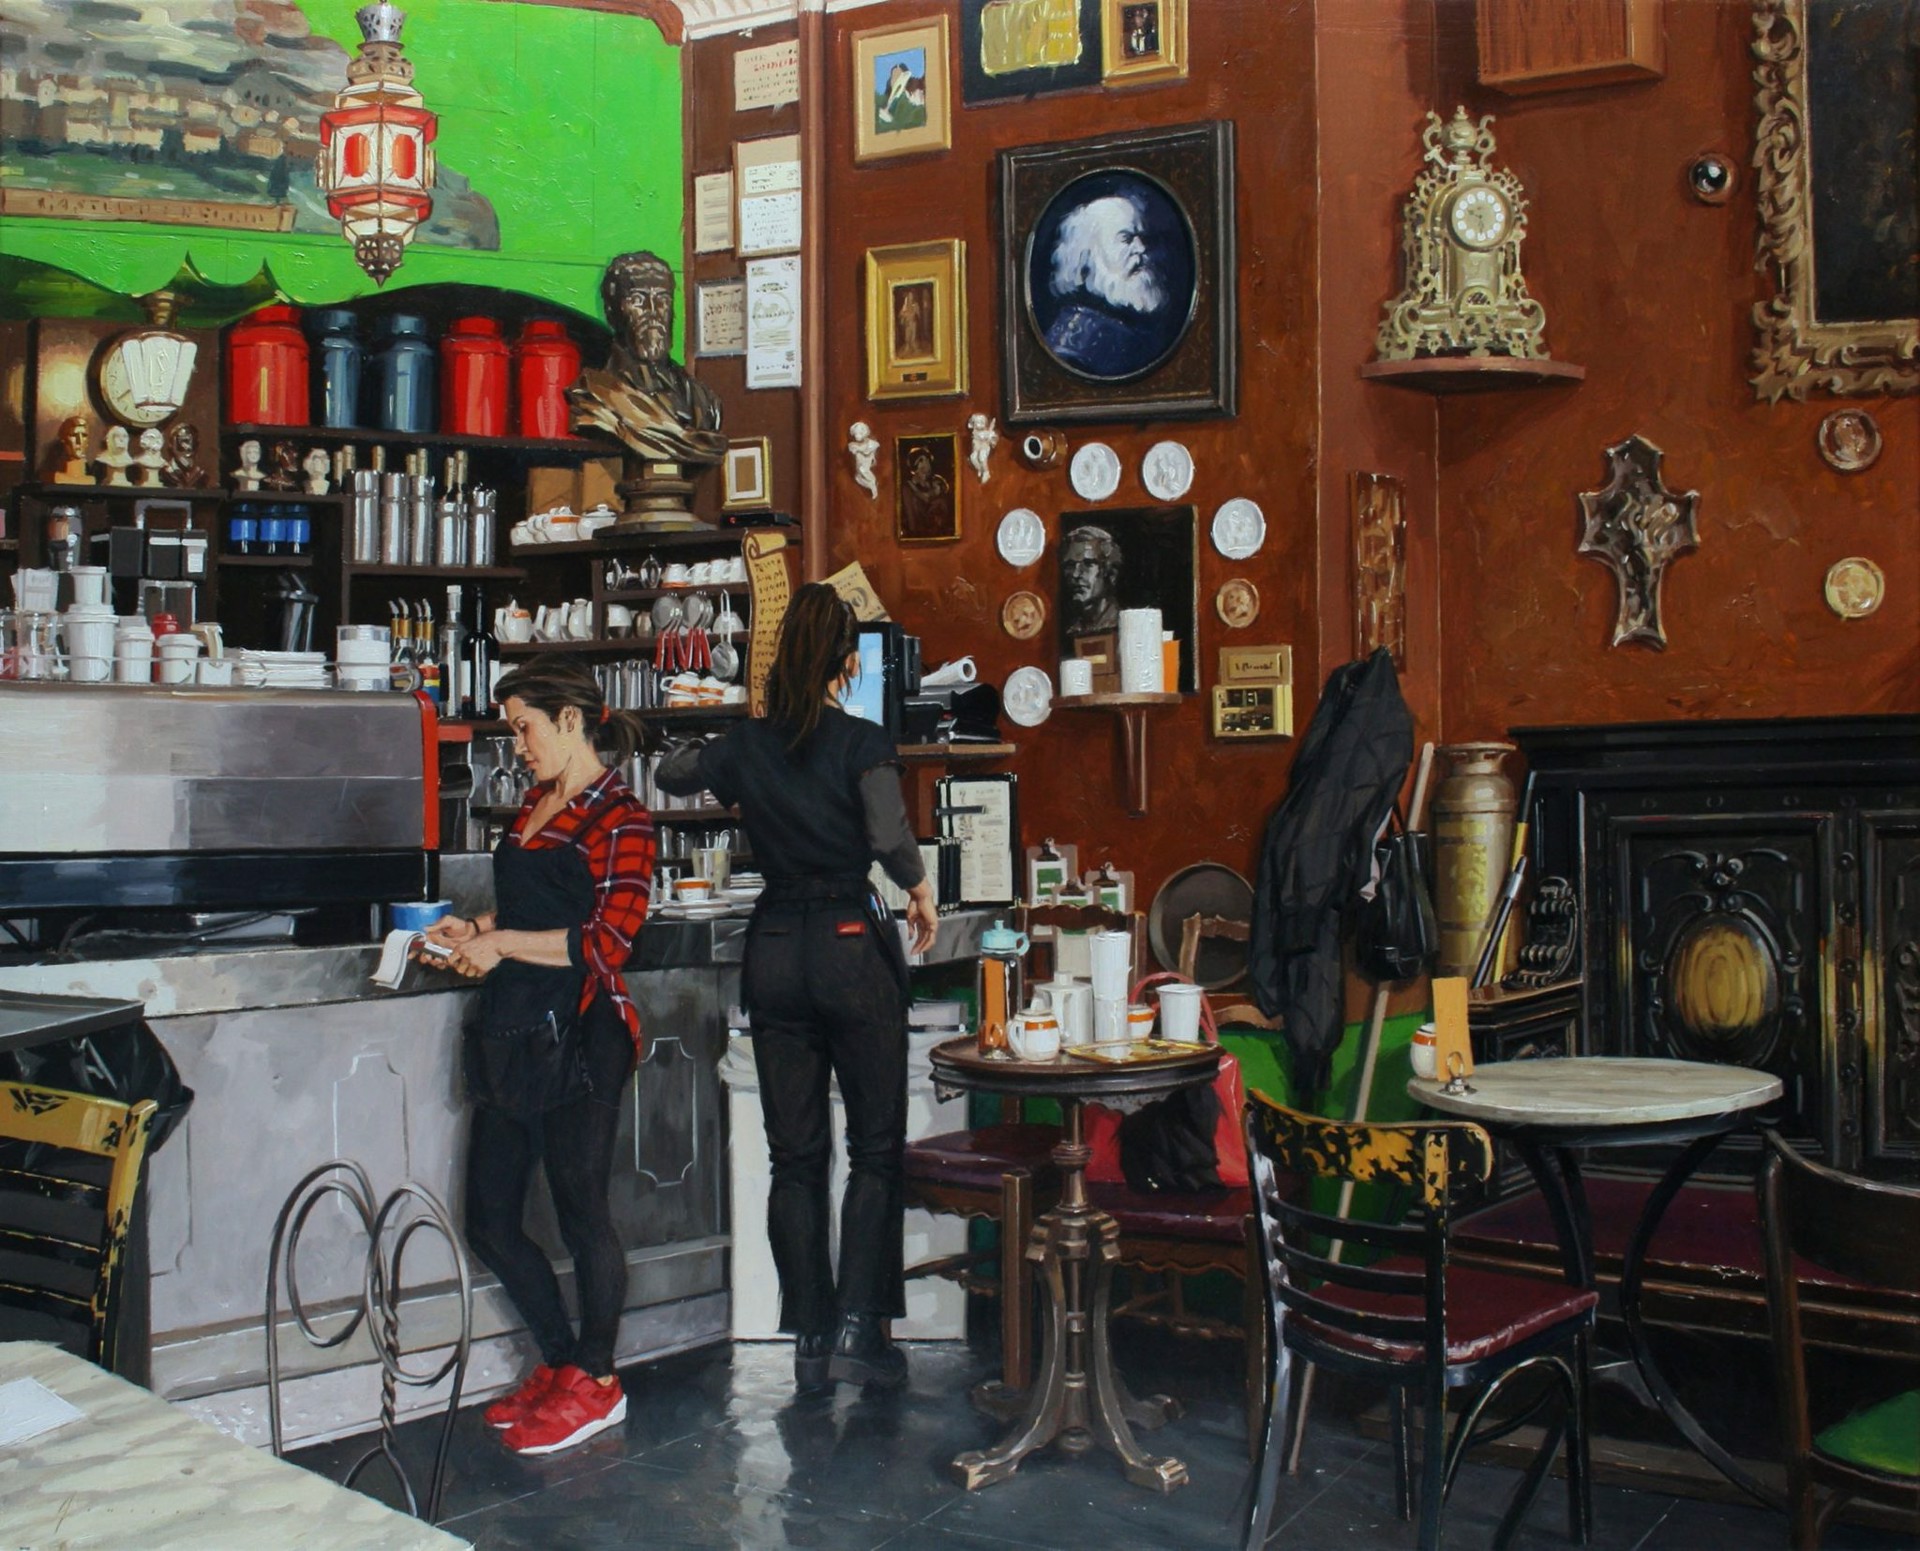 Waitresses at Caffe Reggio by Vincent Giarrano